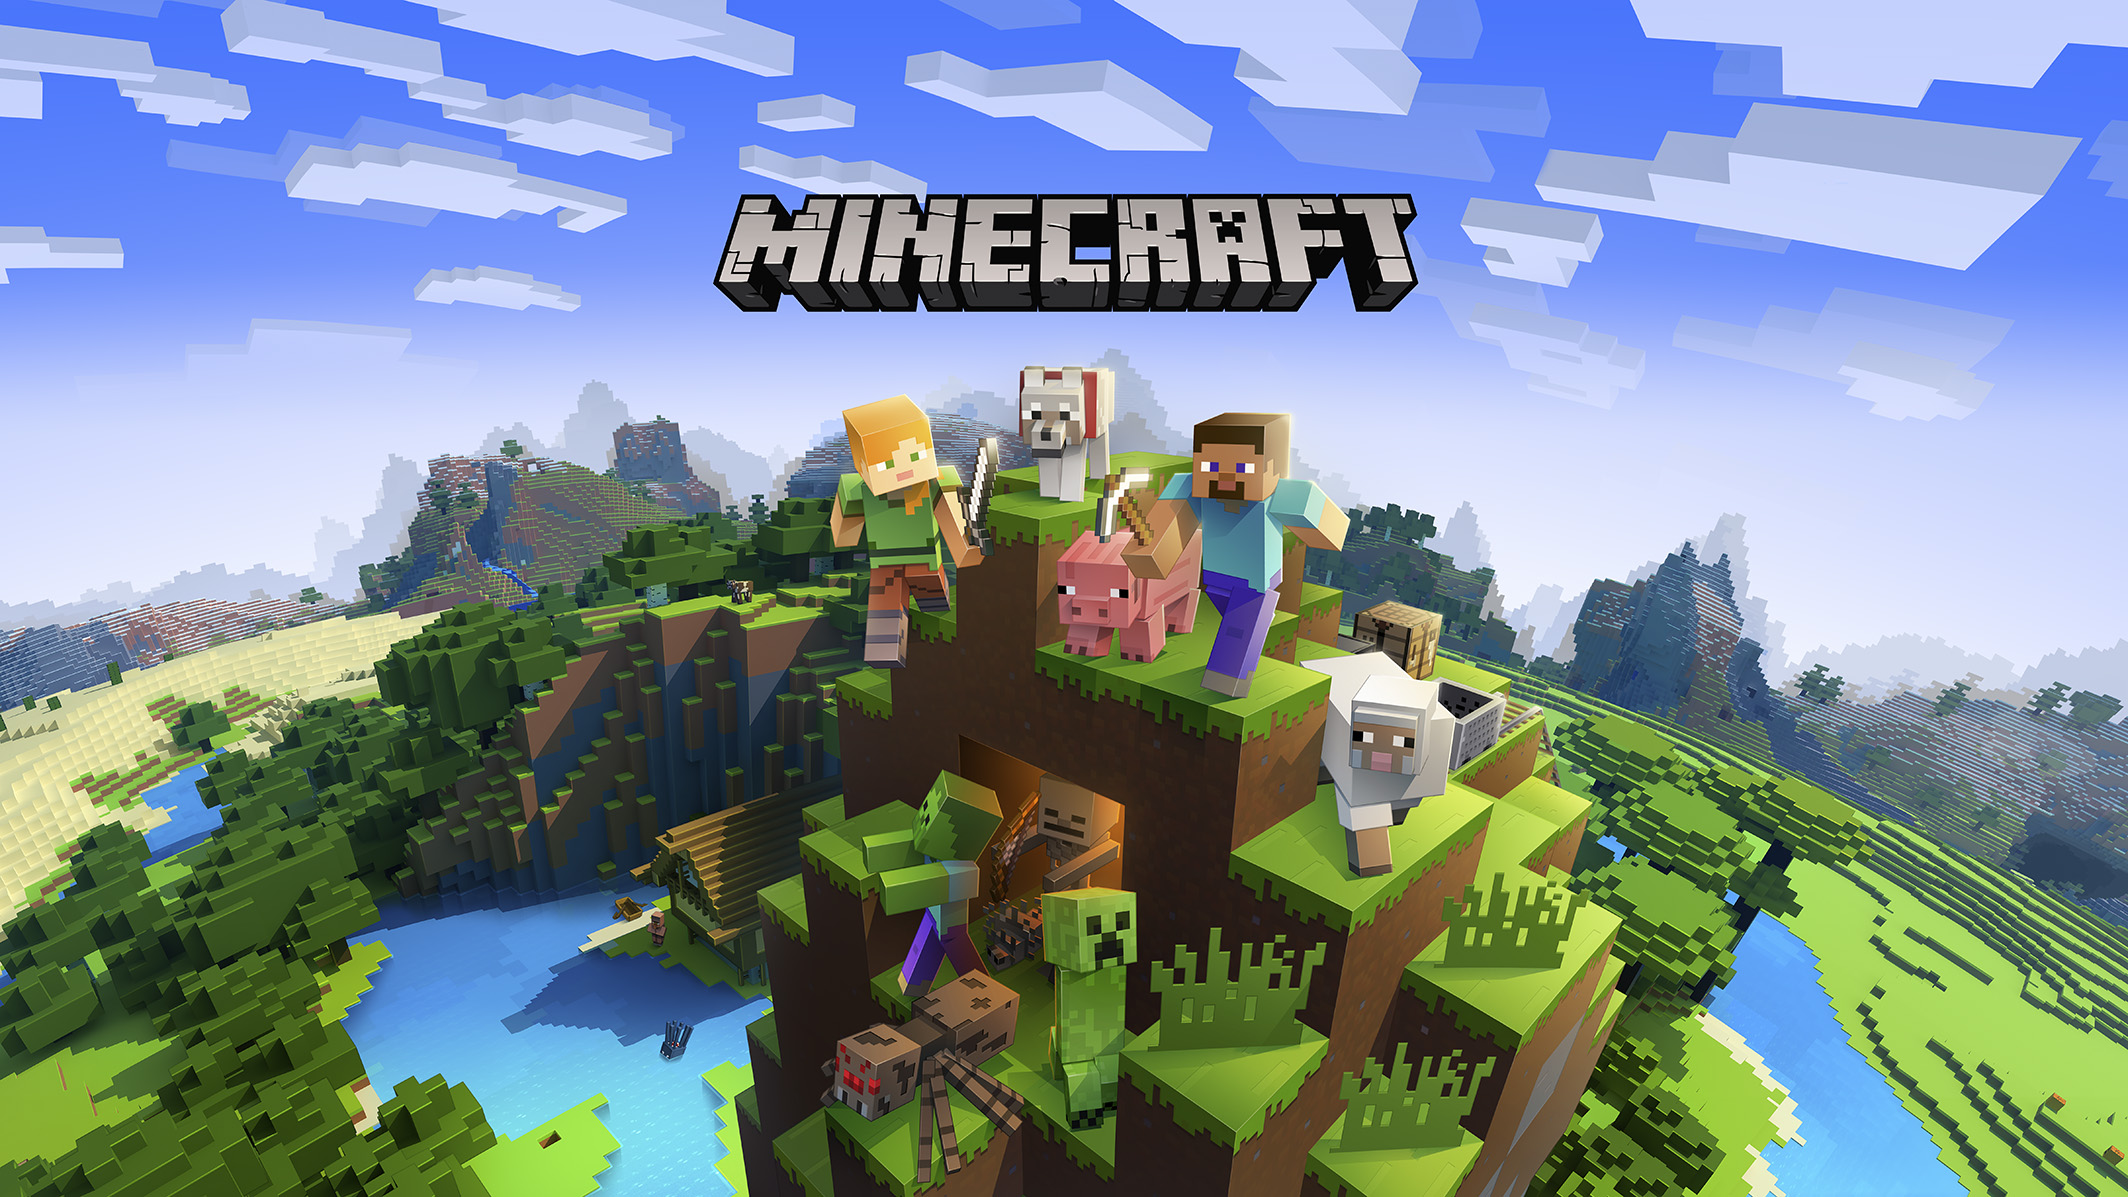 Minecraft mobile builds towards desktop version with latest update, Minecraft